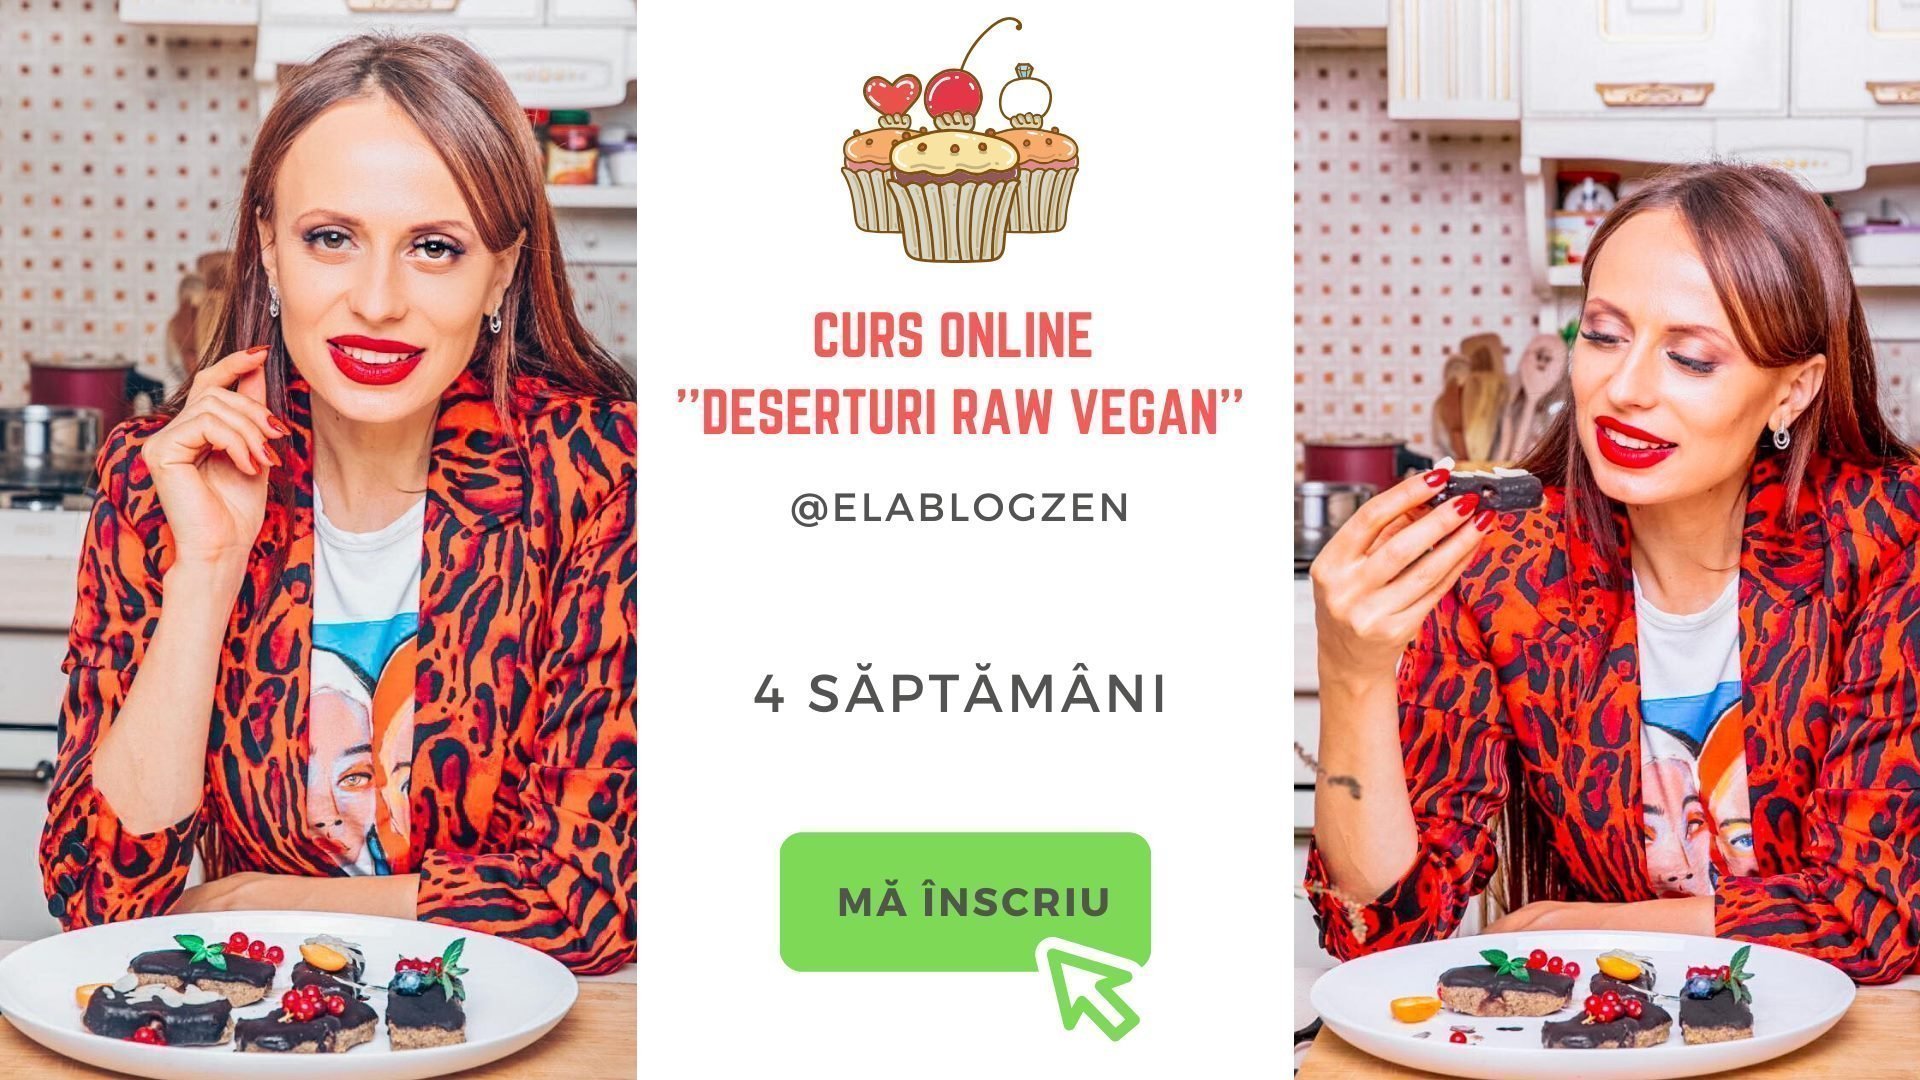  Curs Online Deserturi Raw Vegan cu Diana Chistol - Editia martie 2021